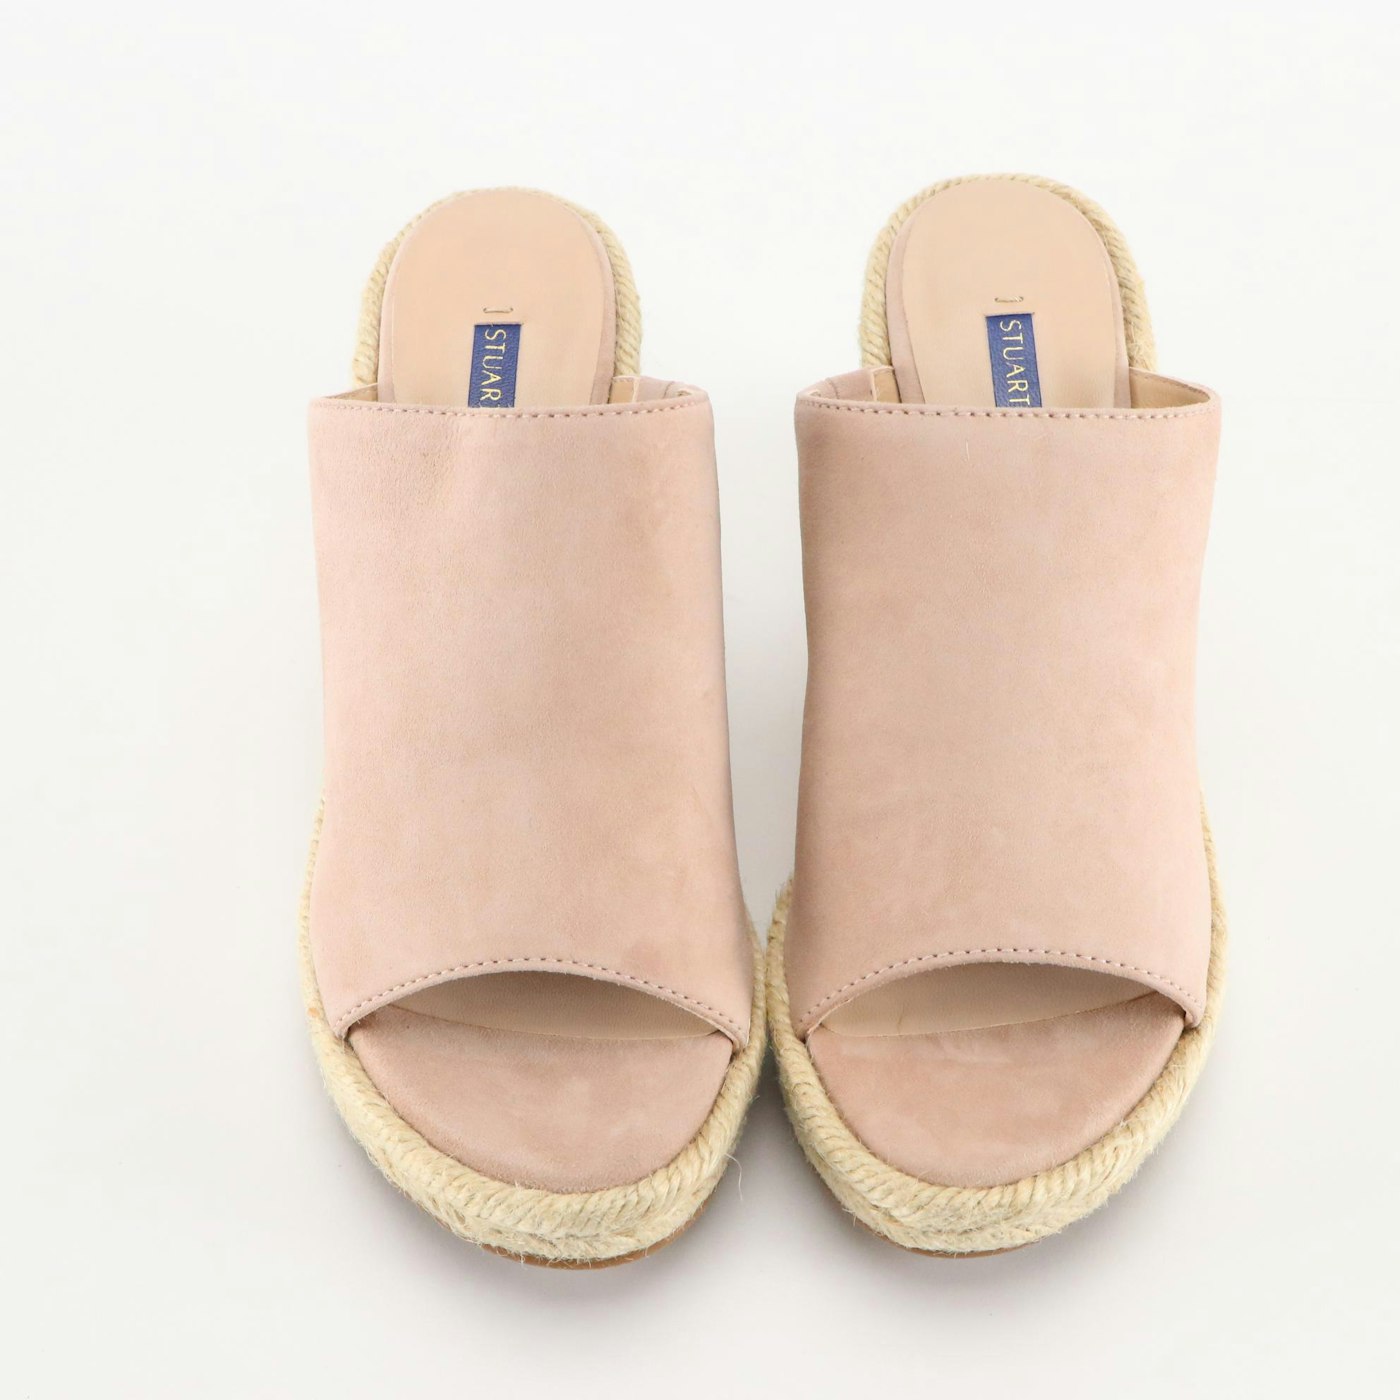 Stuart Weitzman Espadrille Wedge Sandals in Suede, New in Boxes | EBTH